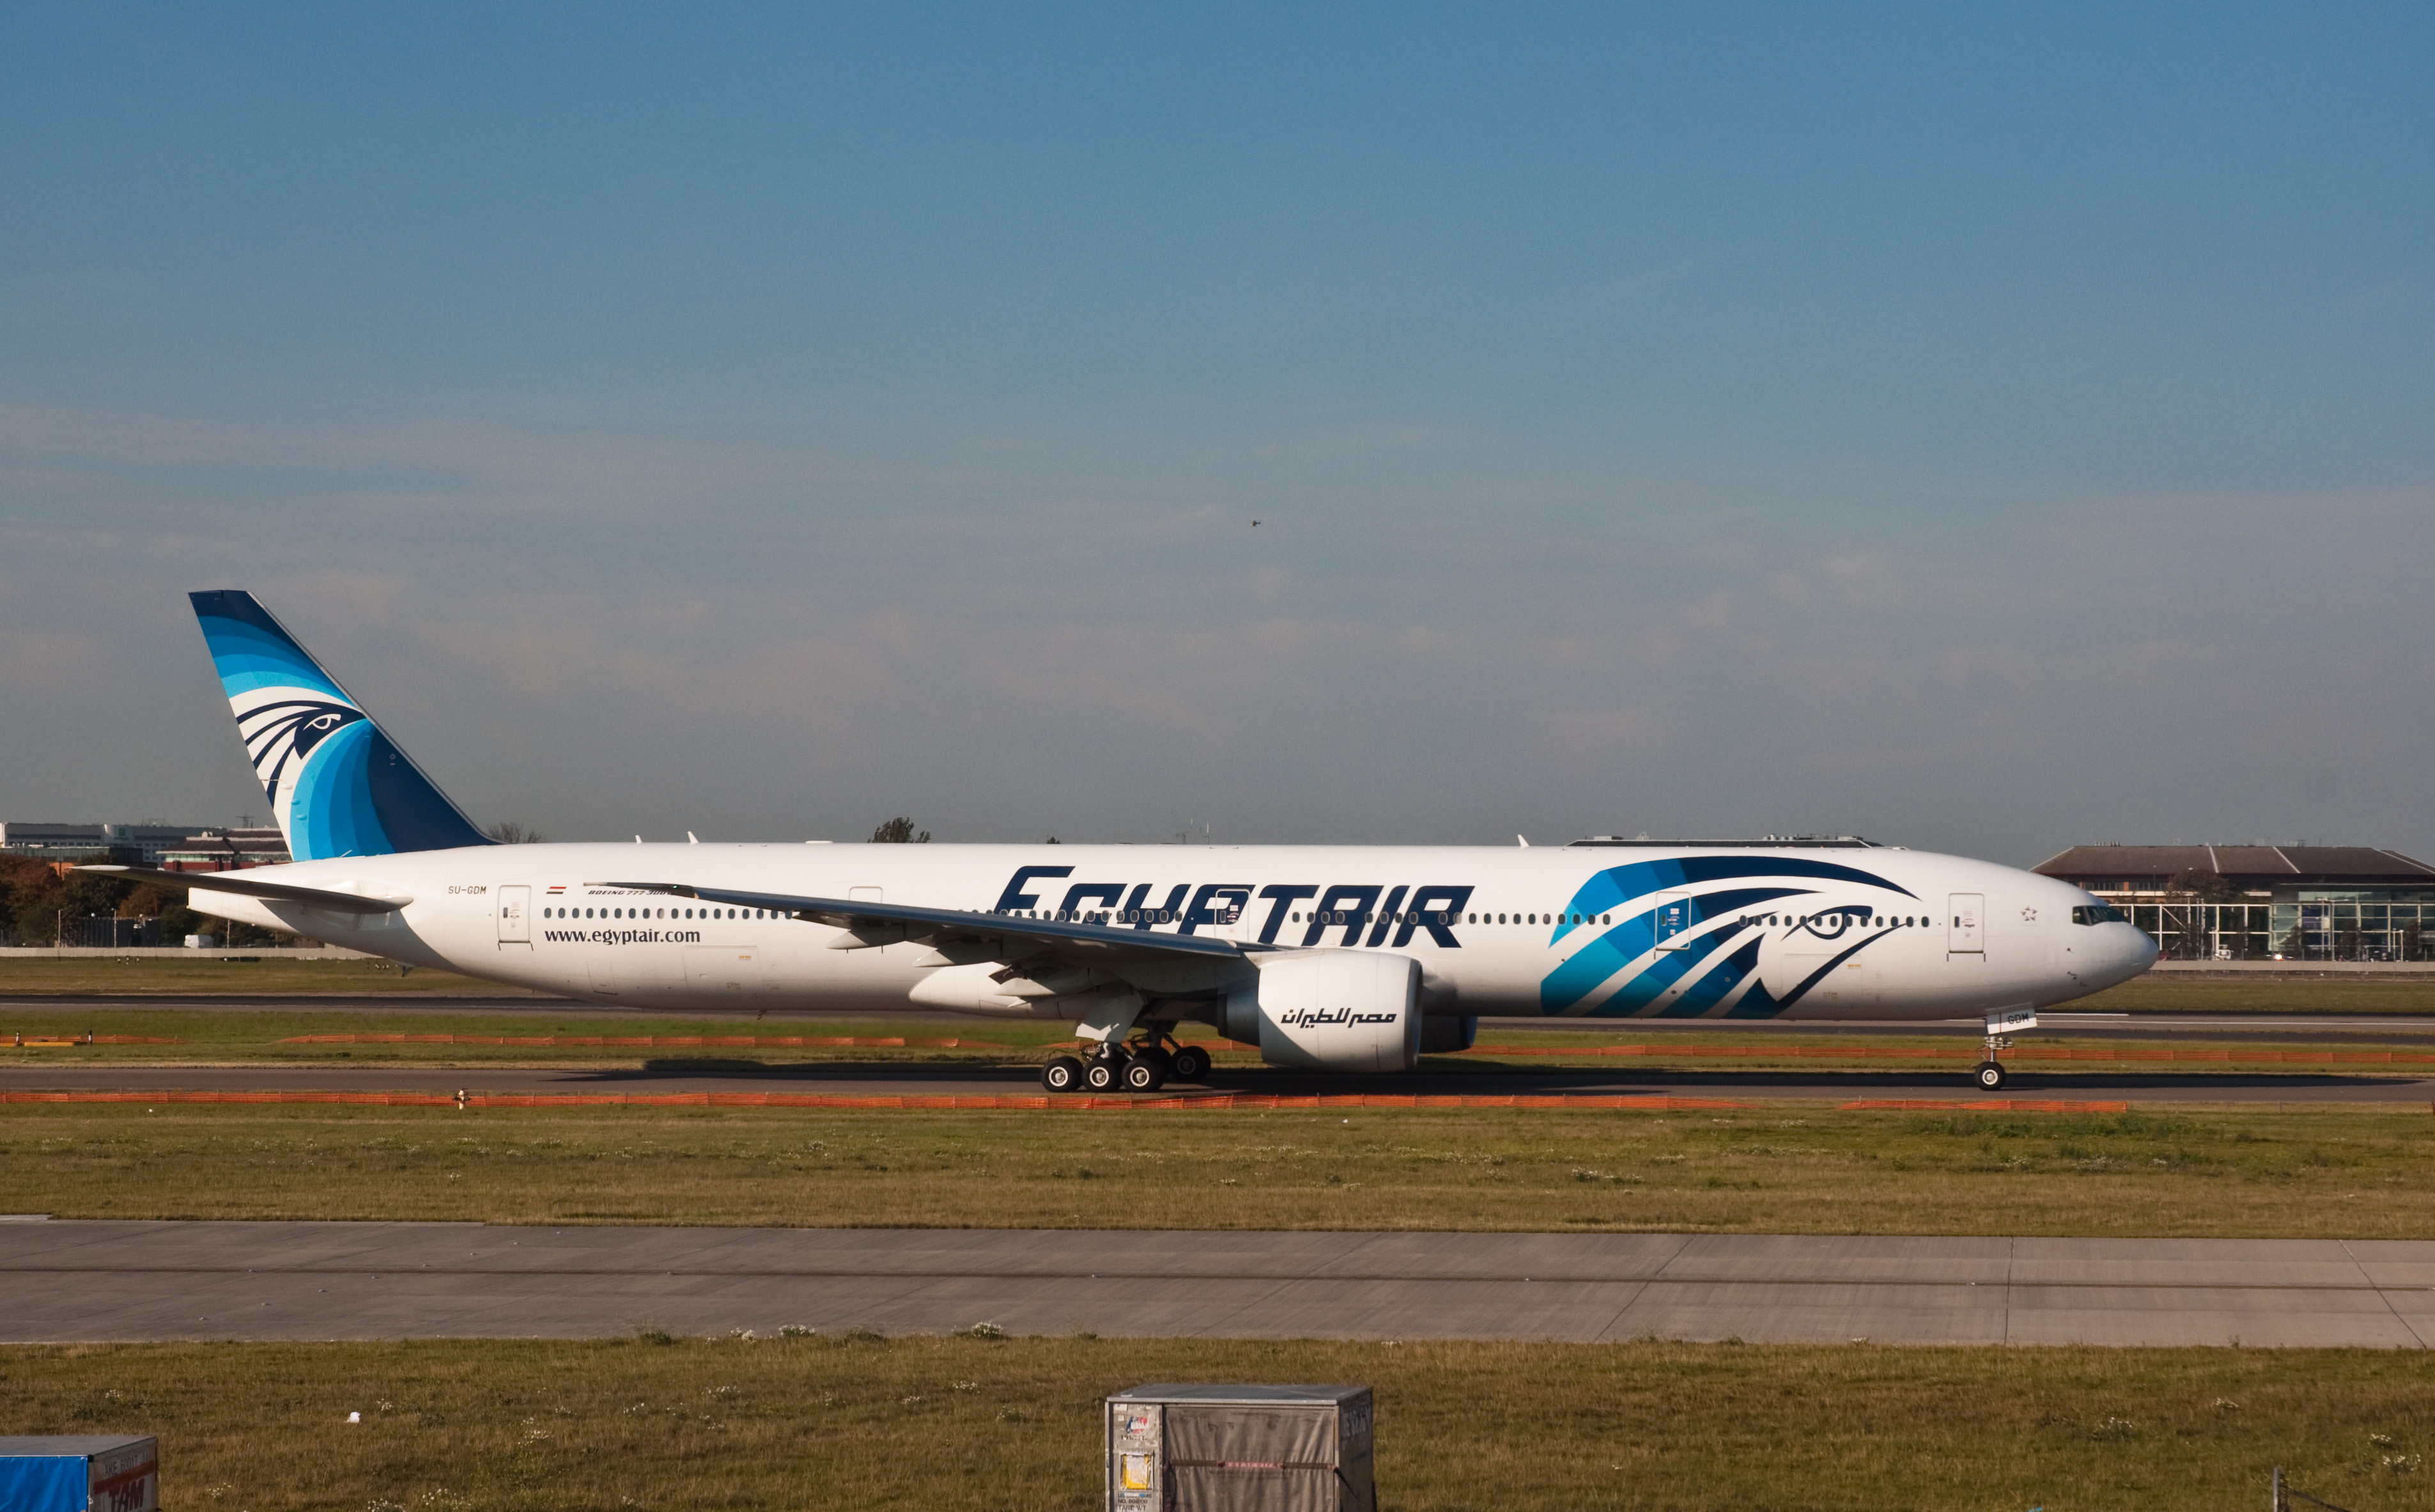 File:EgyptAir Boeing 777-300ER SU-GDM London Heathrow Airport.jpg - Wikipedia